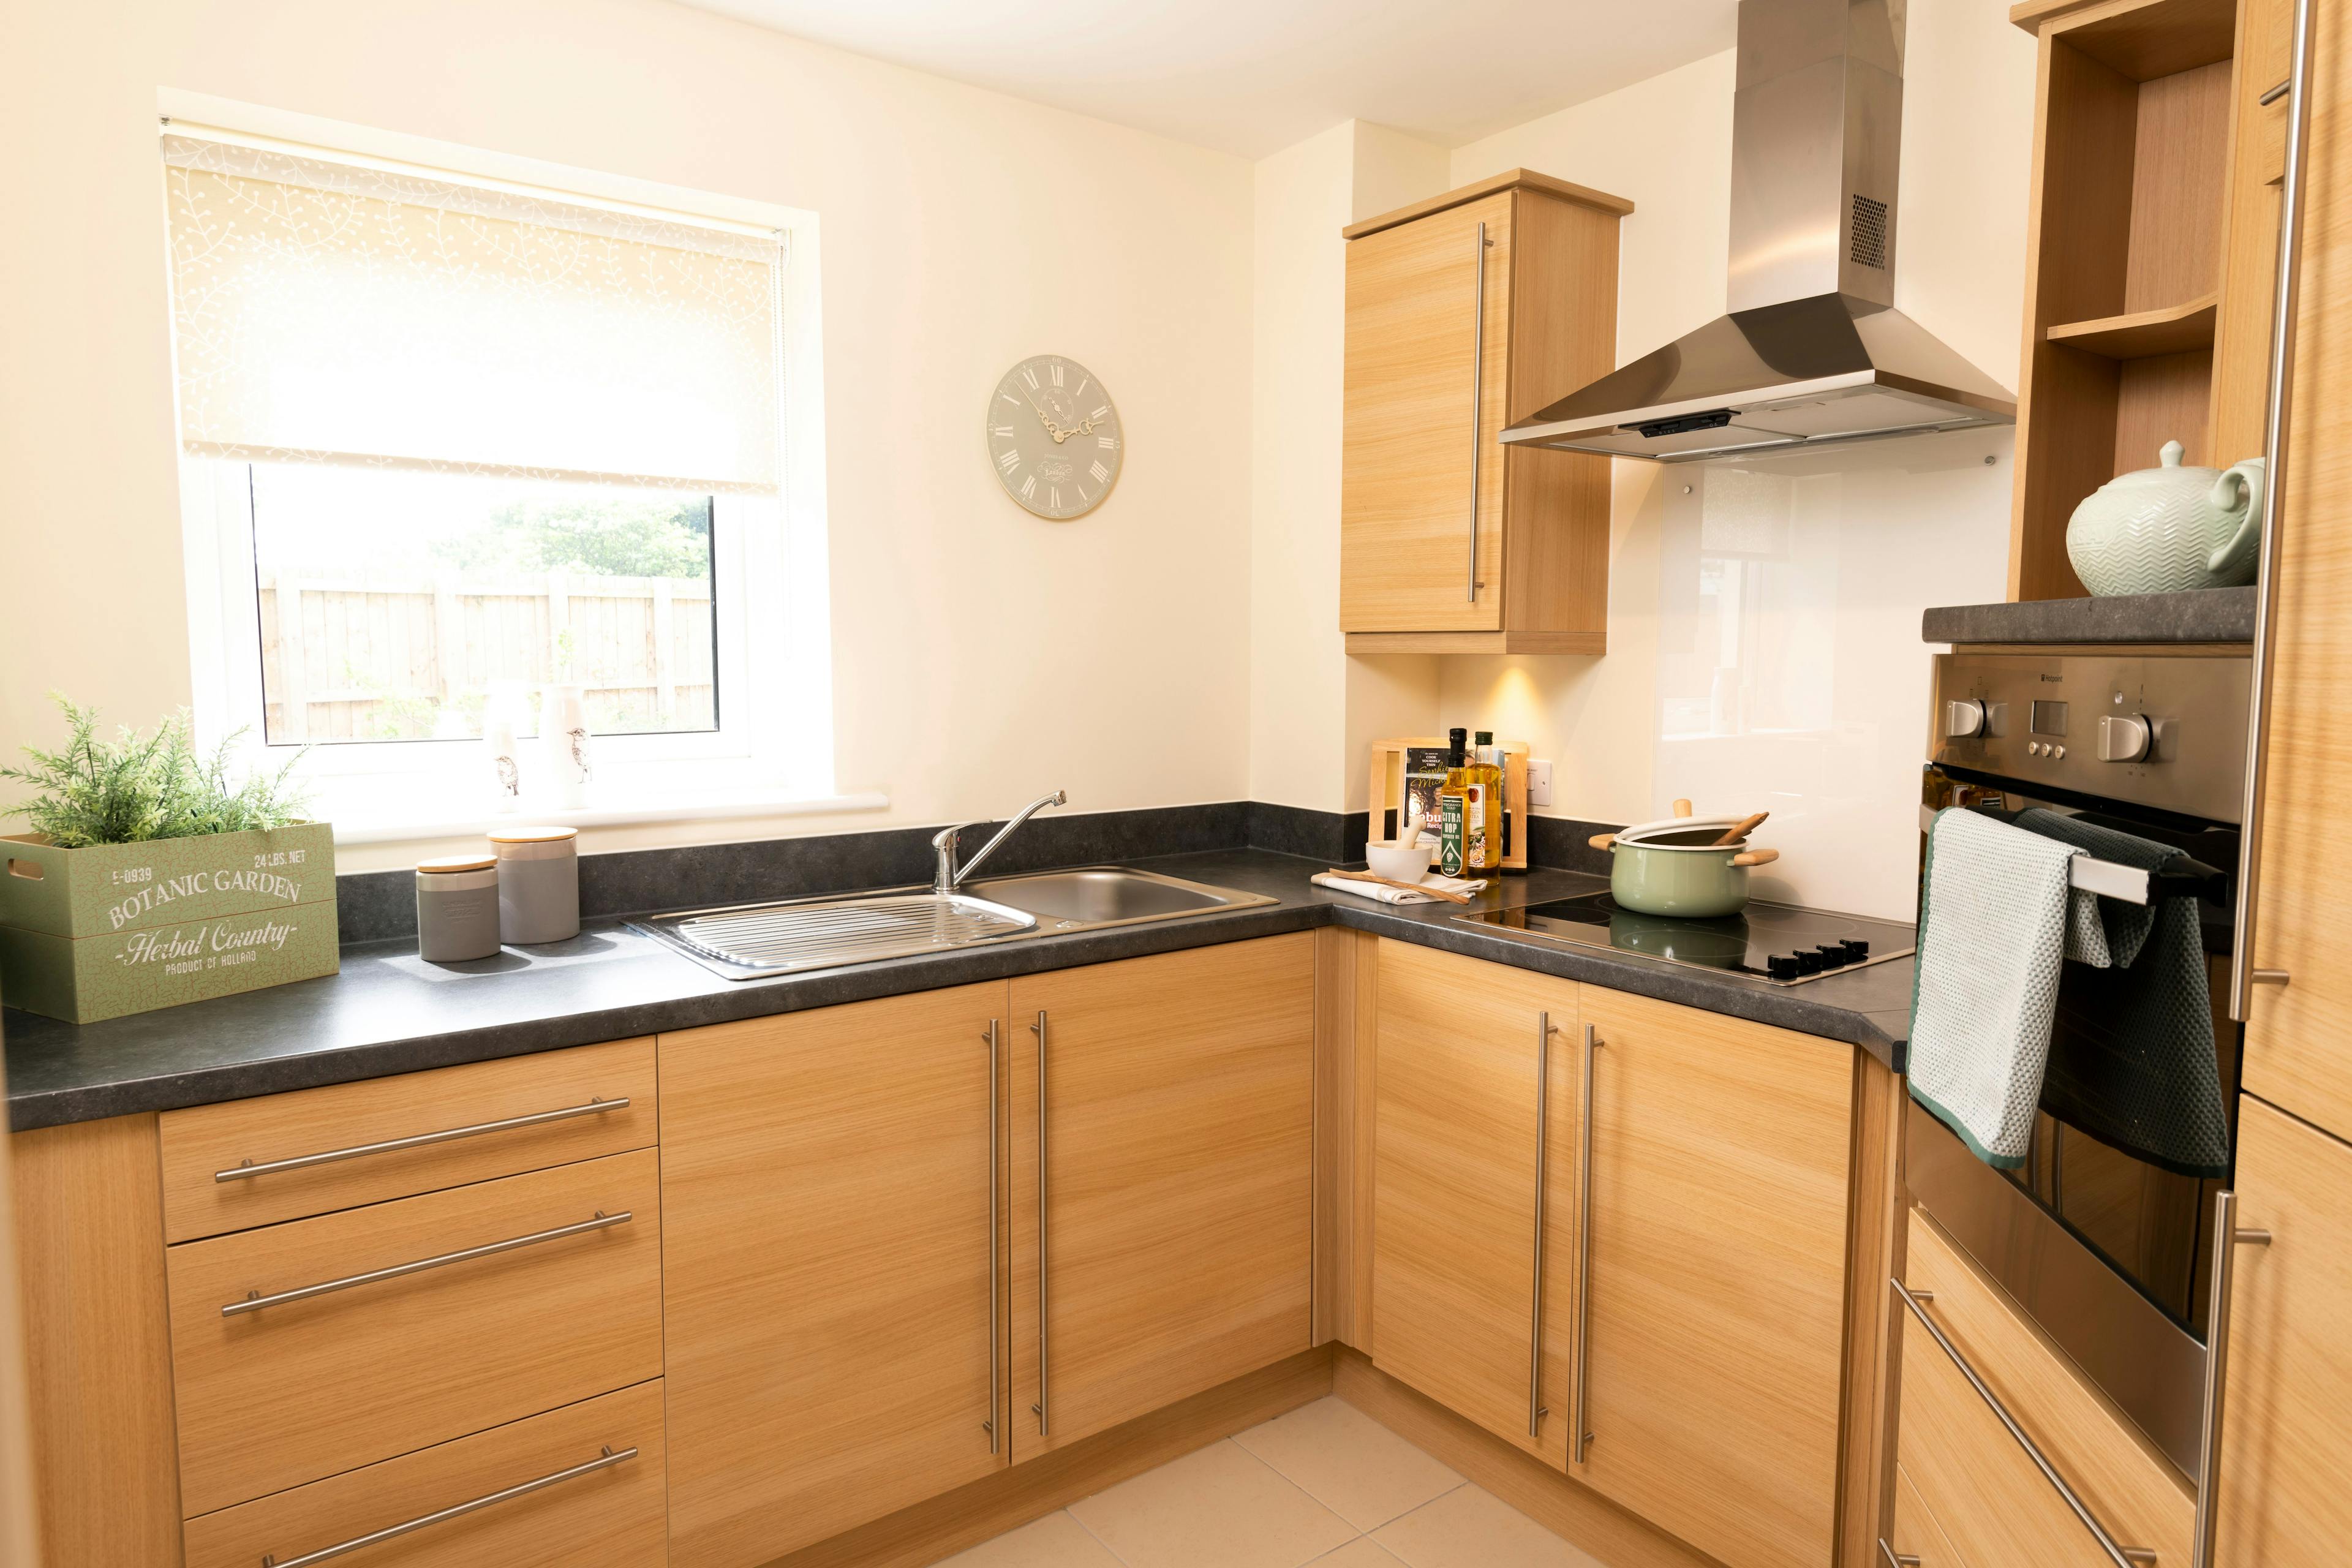 Kitchen of Roslyn Court Retirement Development in Ely, Cambridgeshire